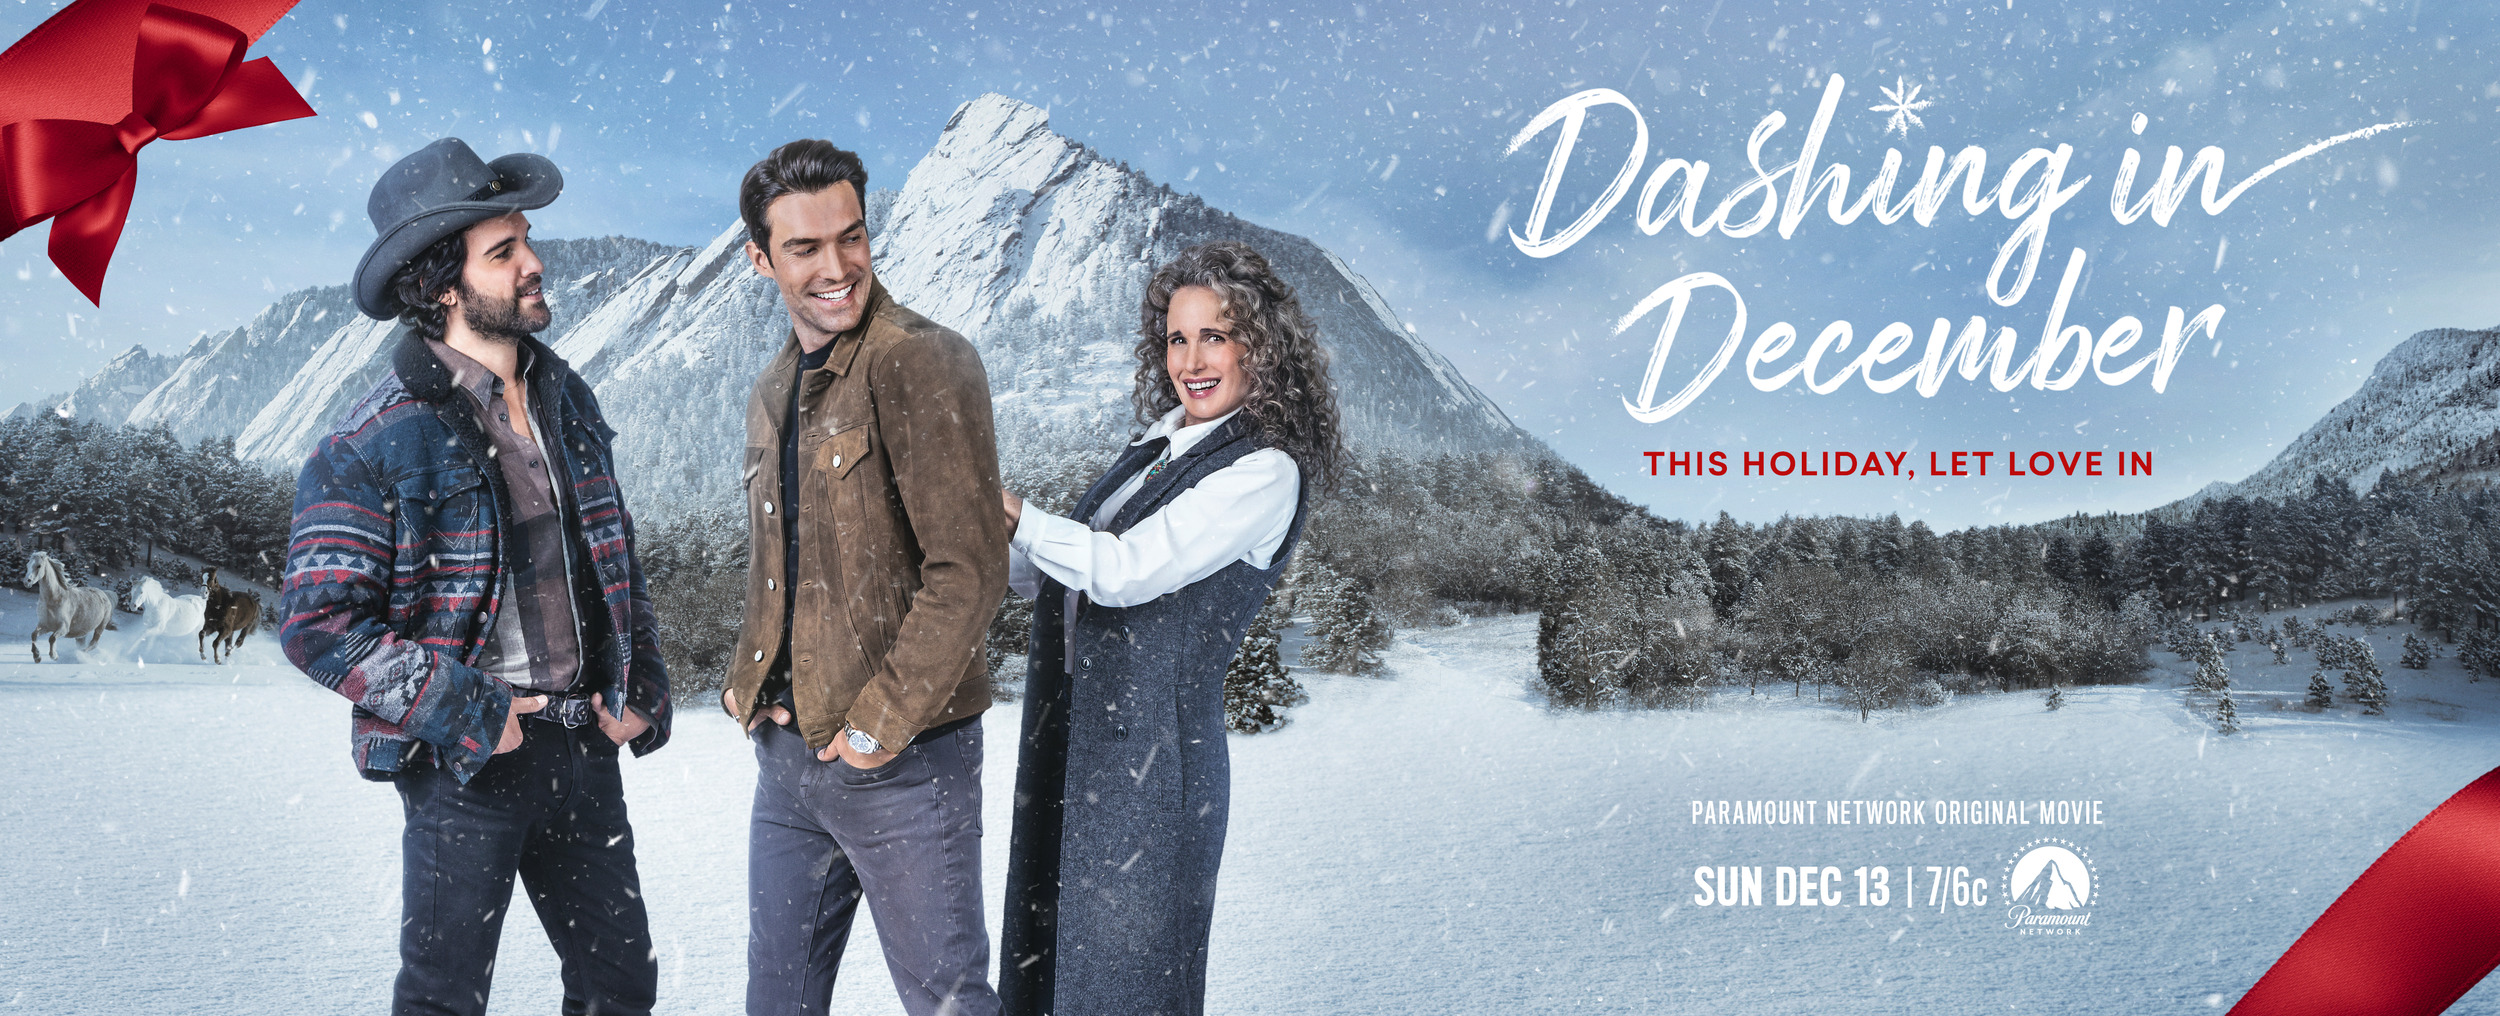 Mega Sized TV Poster Image for Dashing in December (#2 of 2)